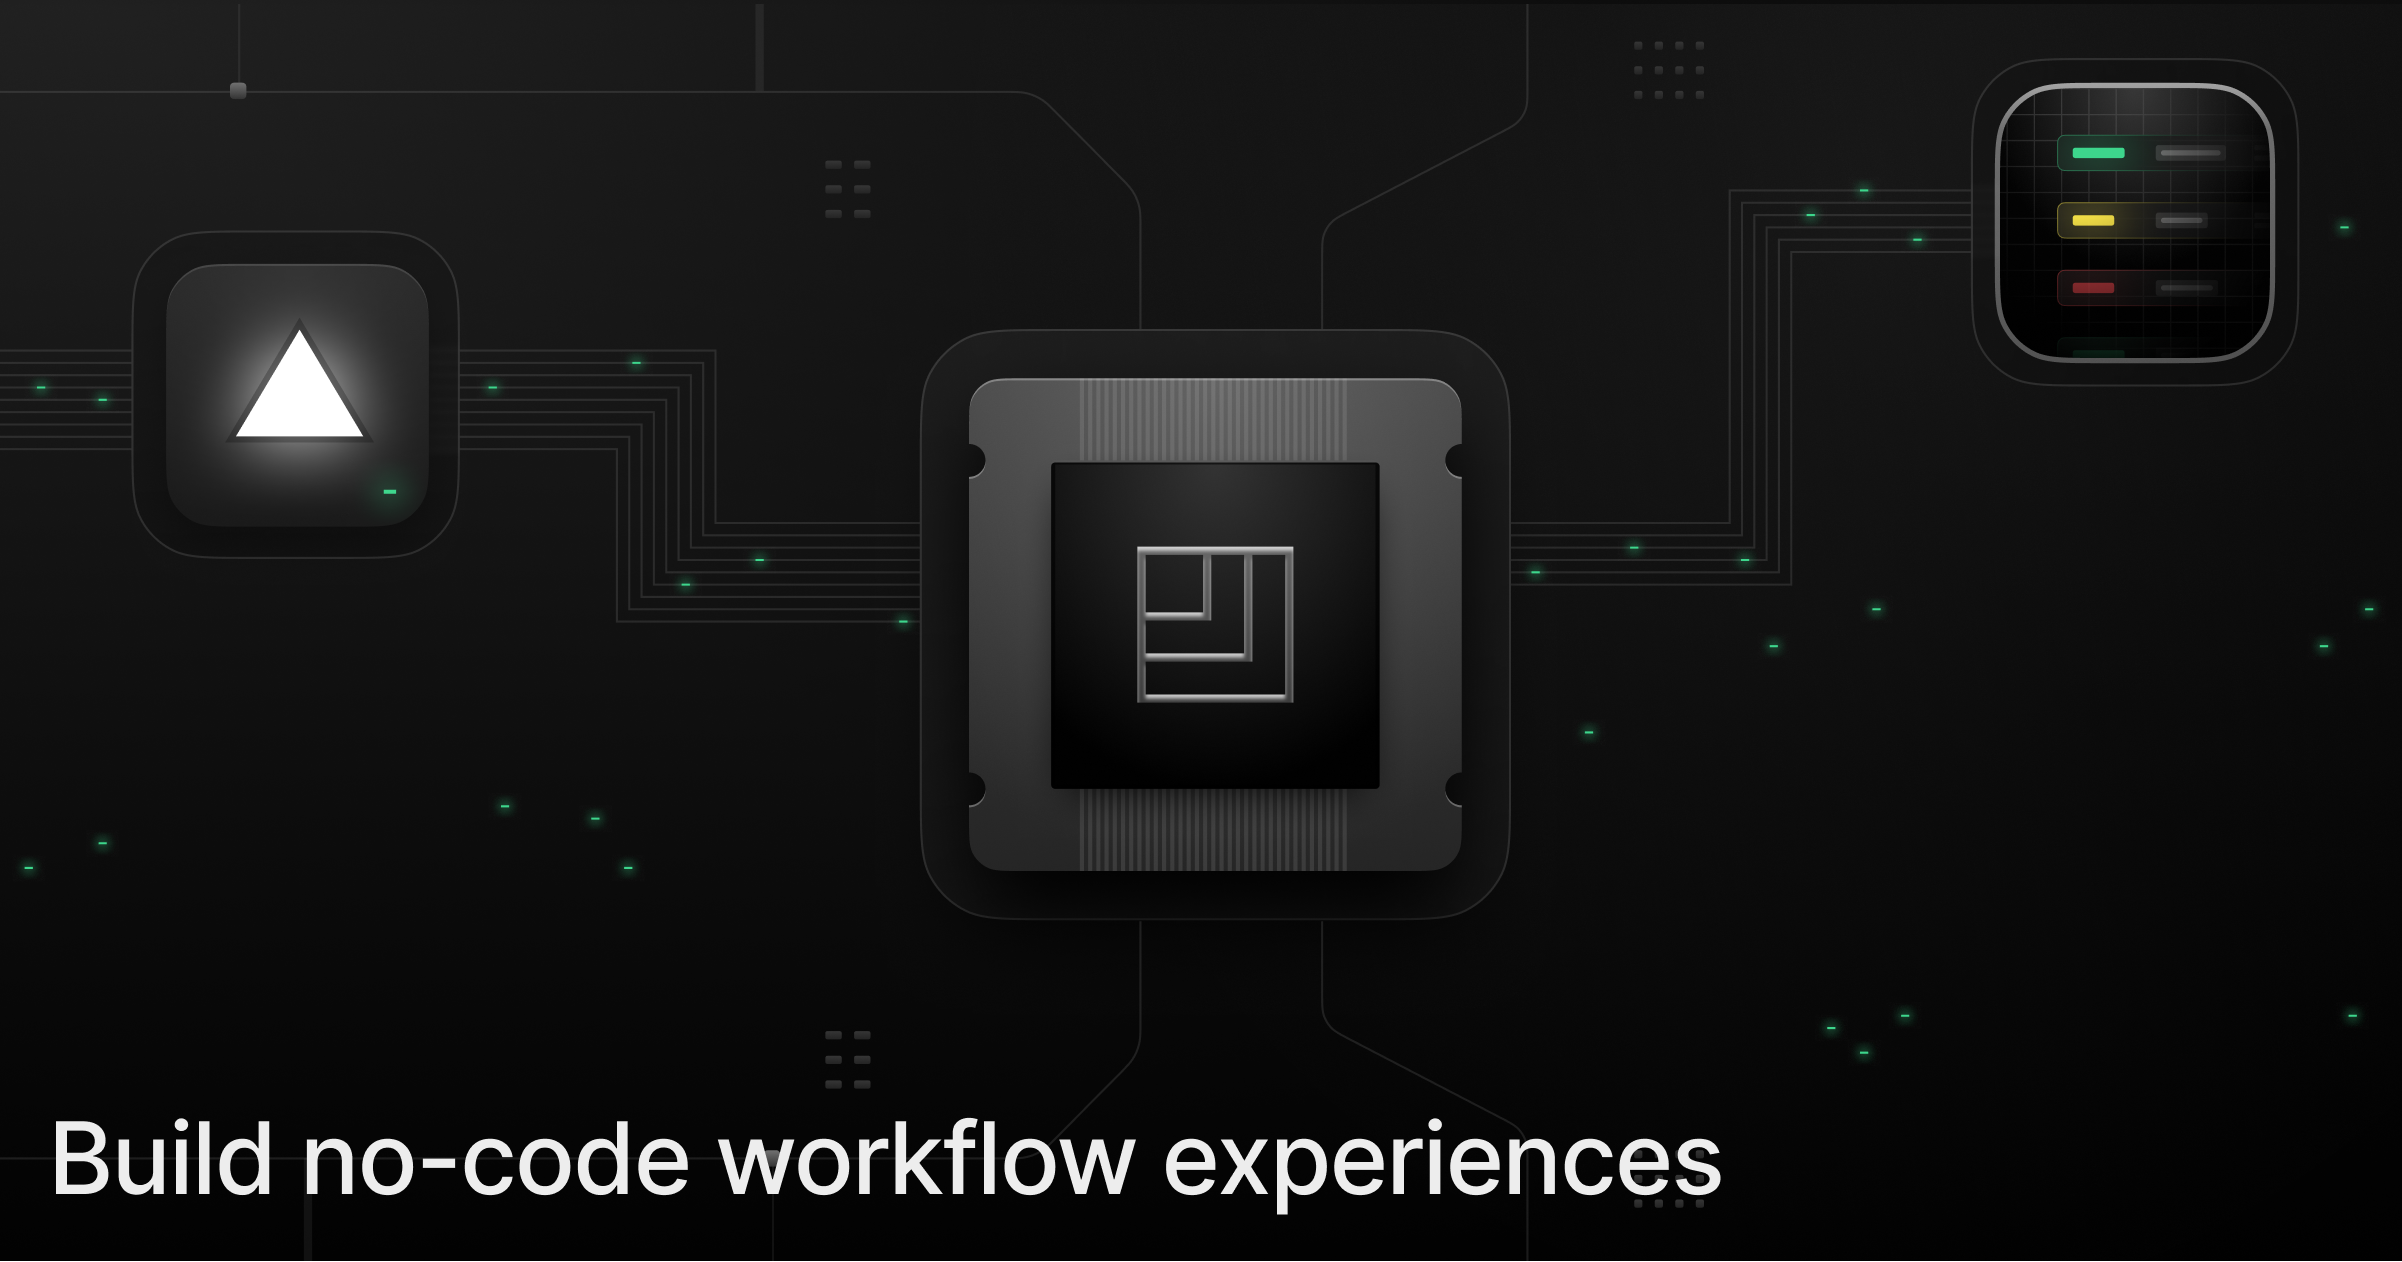 Build Week #1, Day 5:
 Build no-code workflow experiences